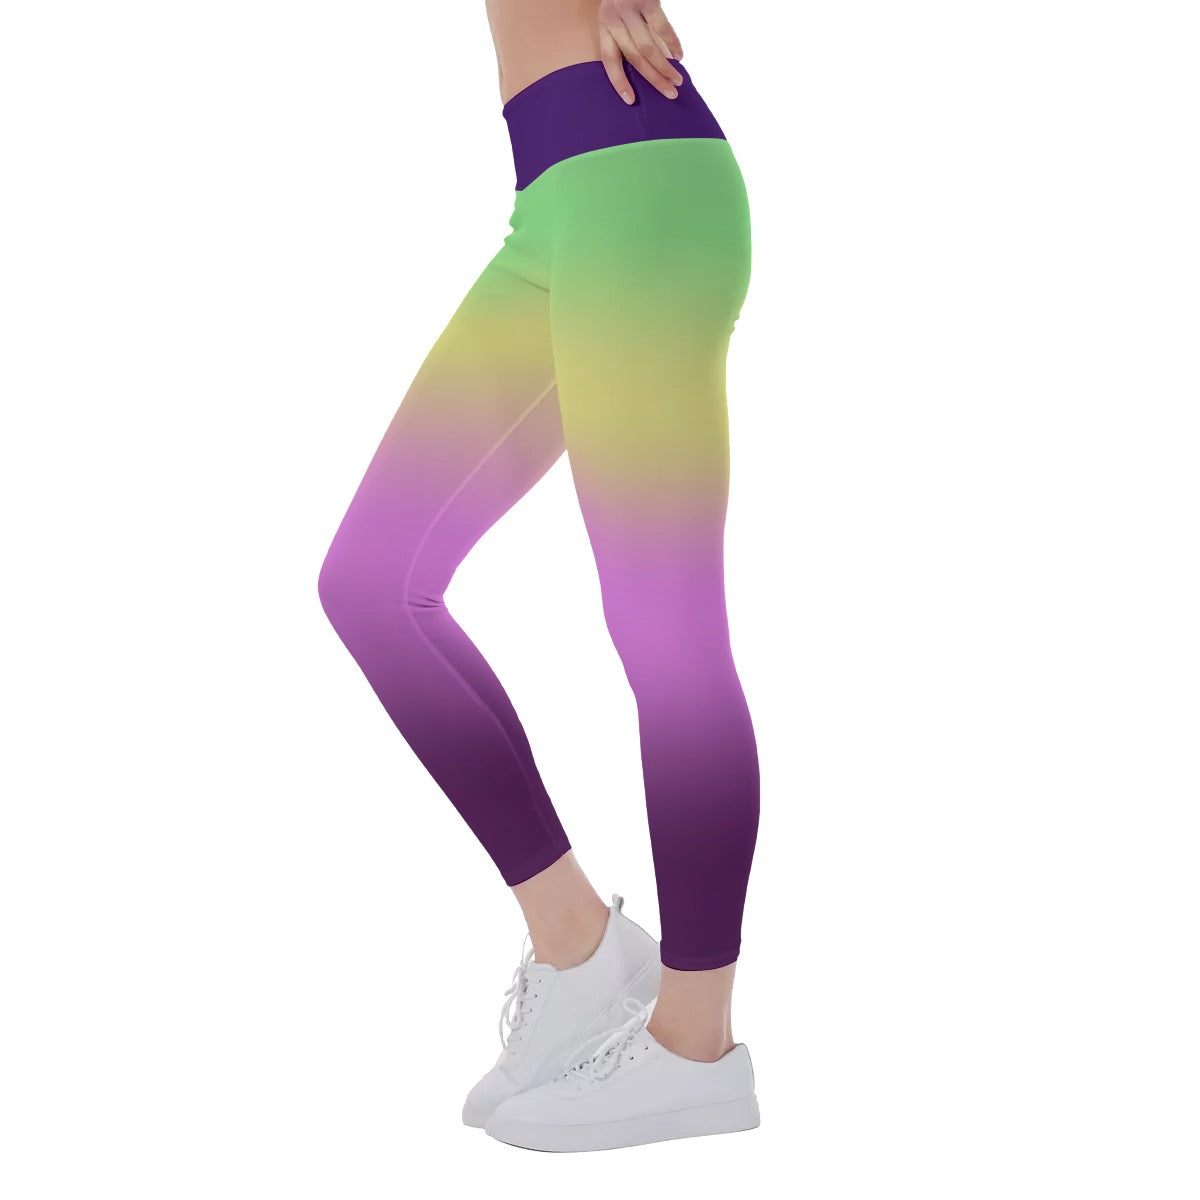 Teen Yoga Pants - Lady Colorful - Yoga Leggings - Personal Hour for Yoga and Meditations 